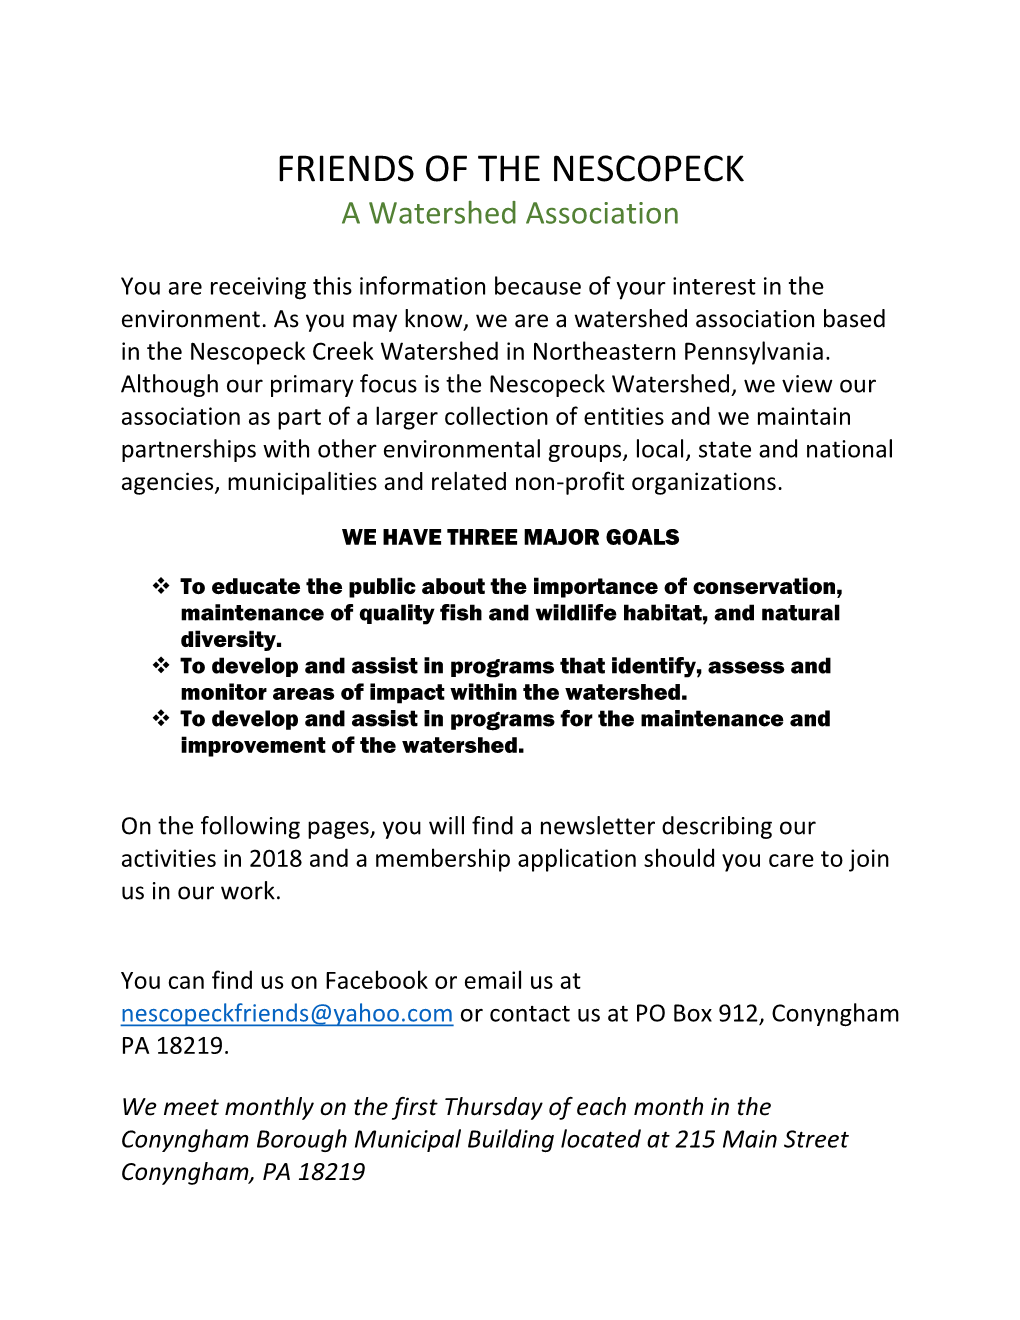 Friends of Nescopeck Newsletter 2018